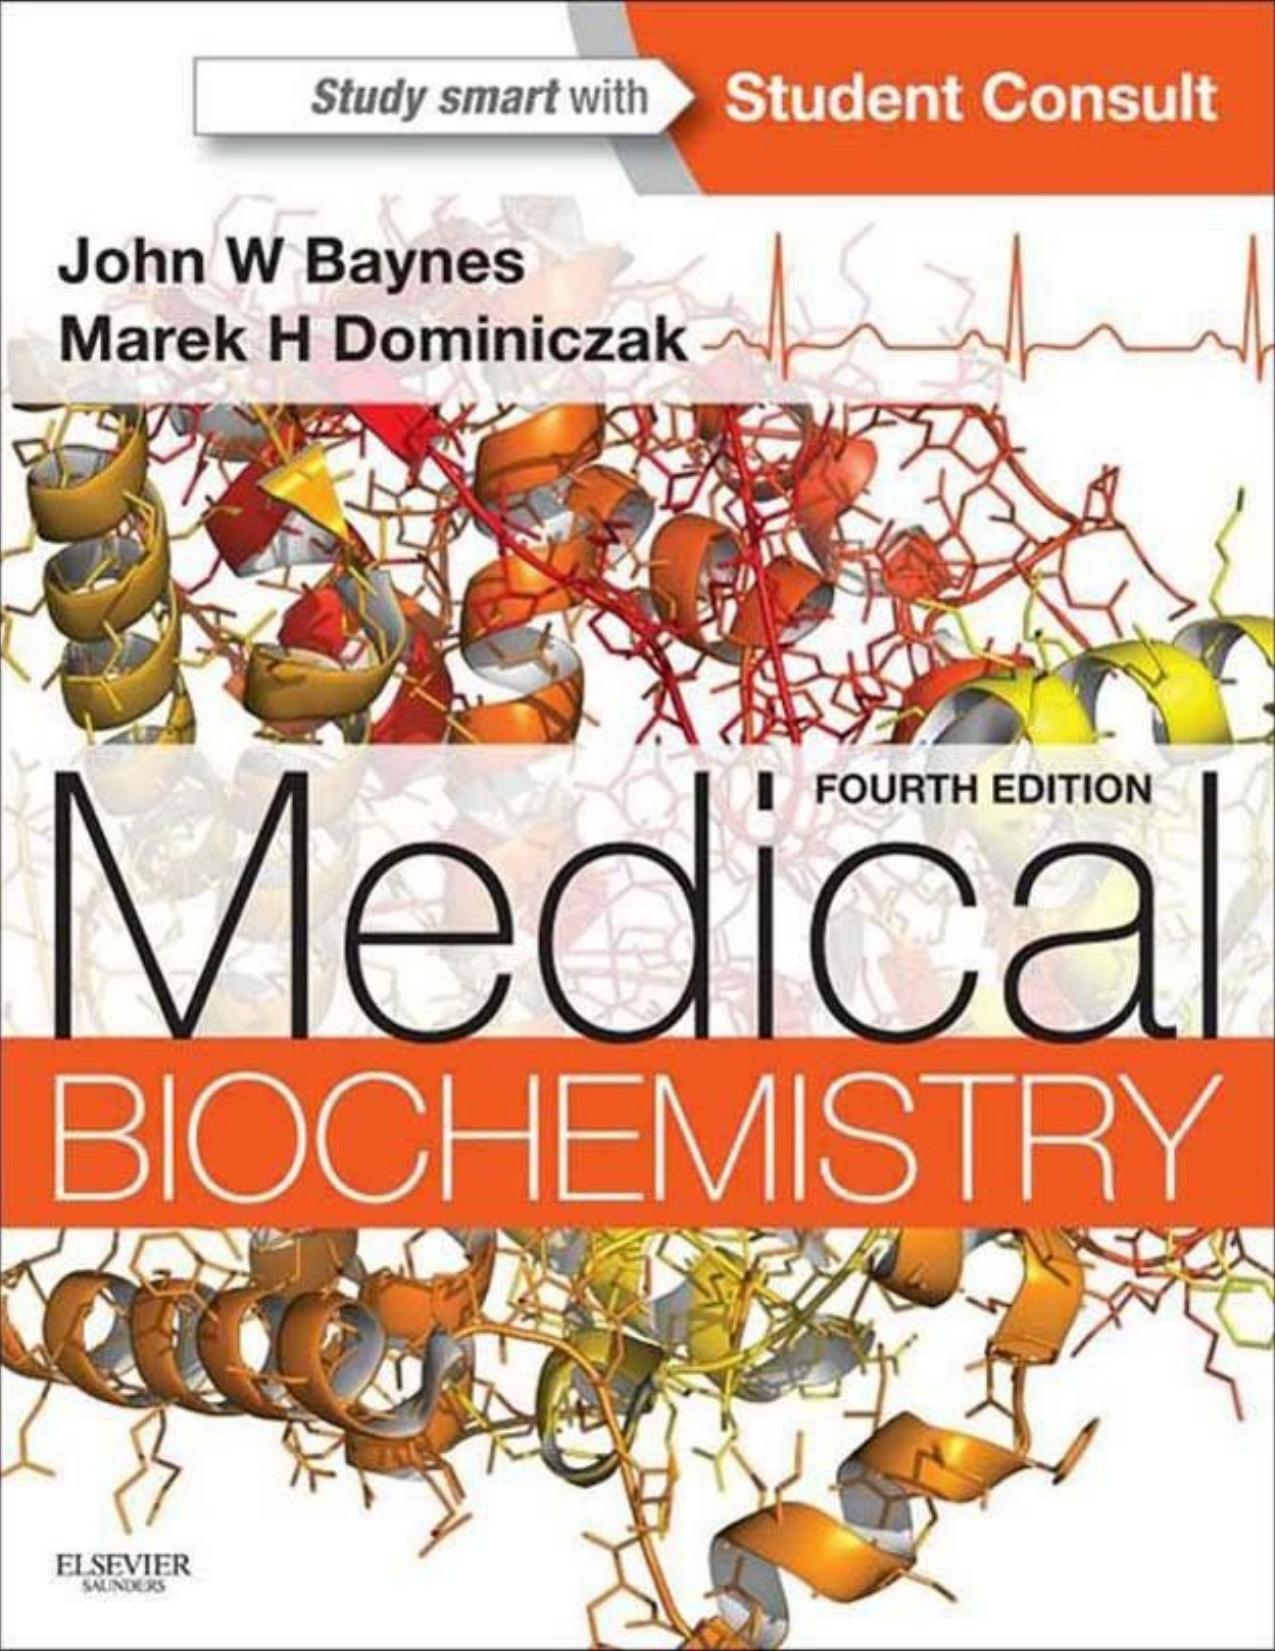 Medical Biochemistry, 4th edition \(Medial Biochemistry\) - PDFDrive.com